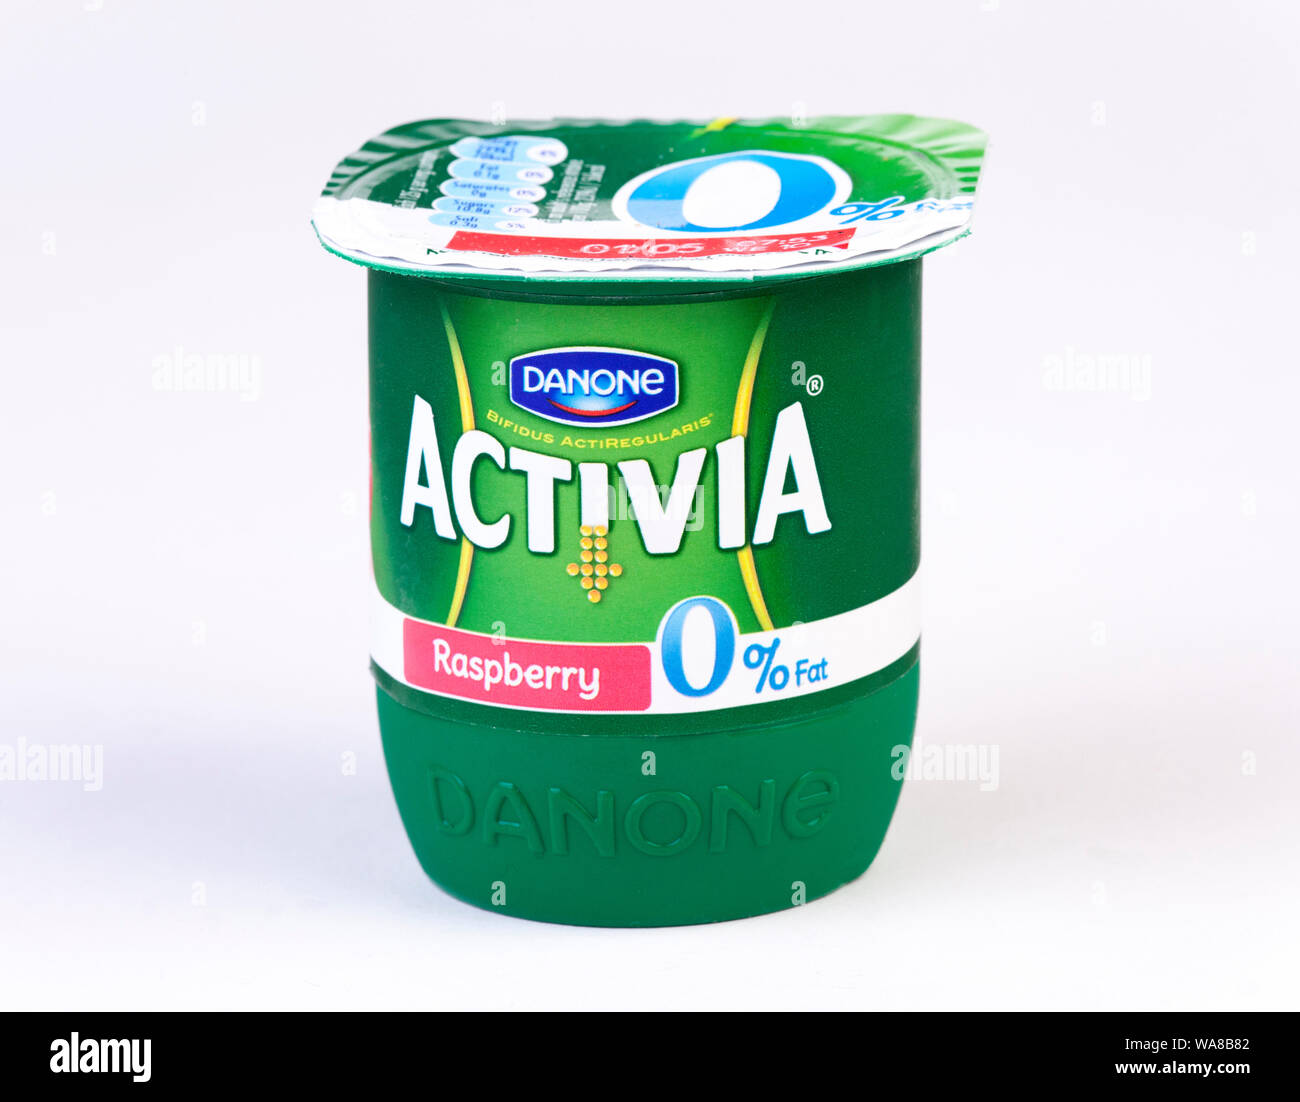 Activia probiotic yoghurt with 0% fat Stock Photo